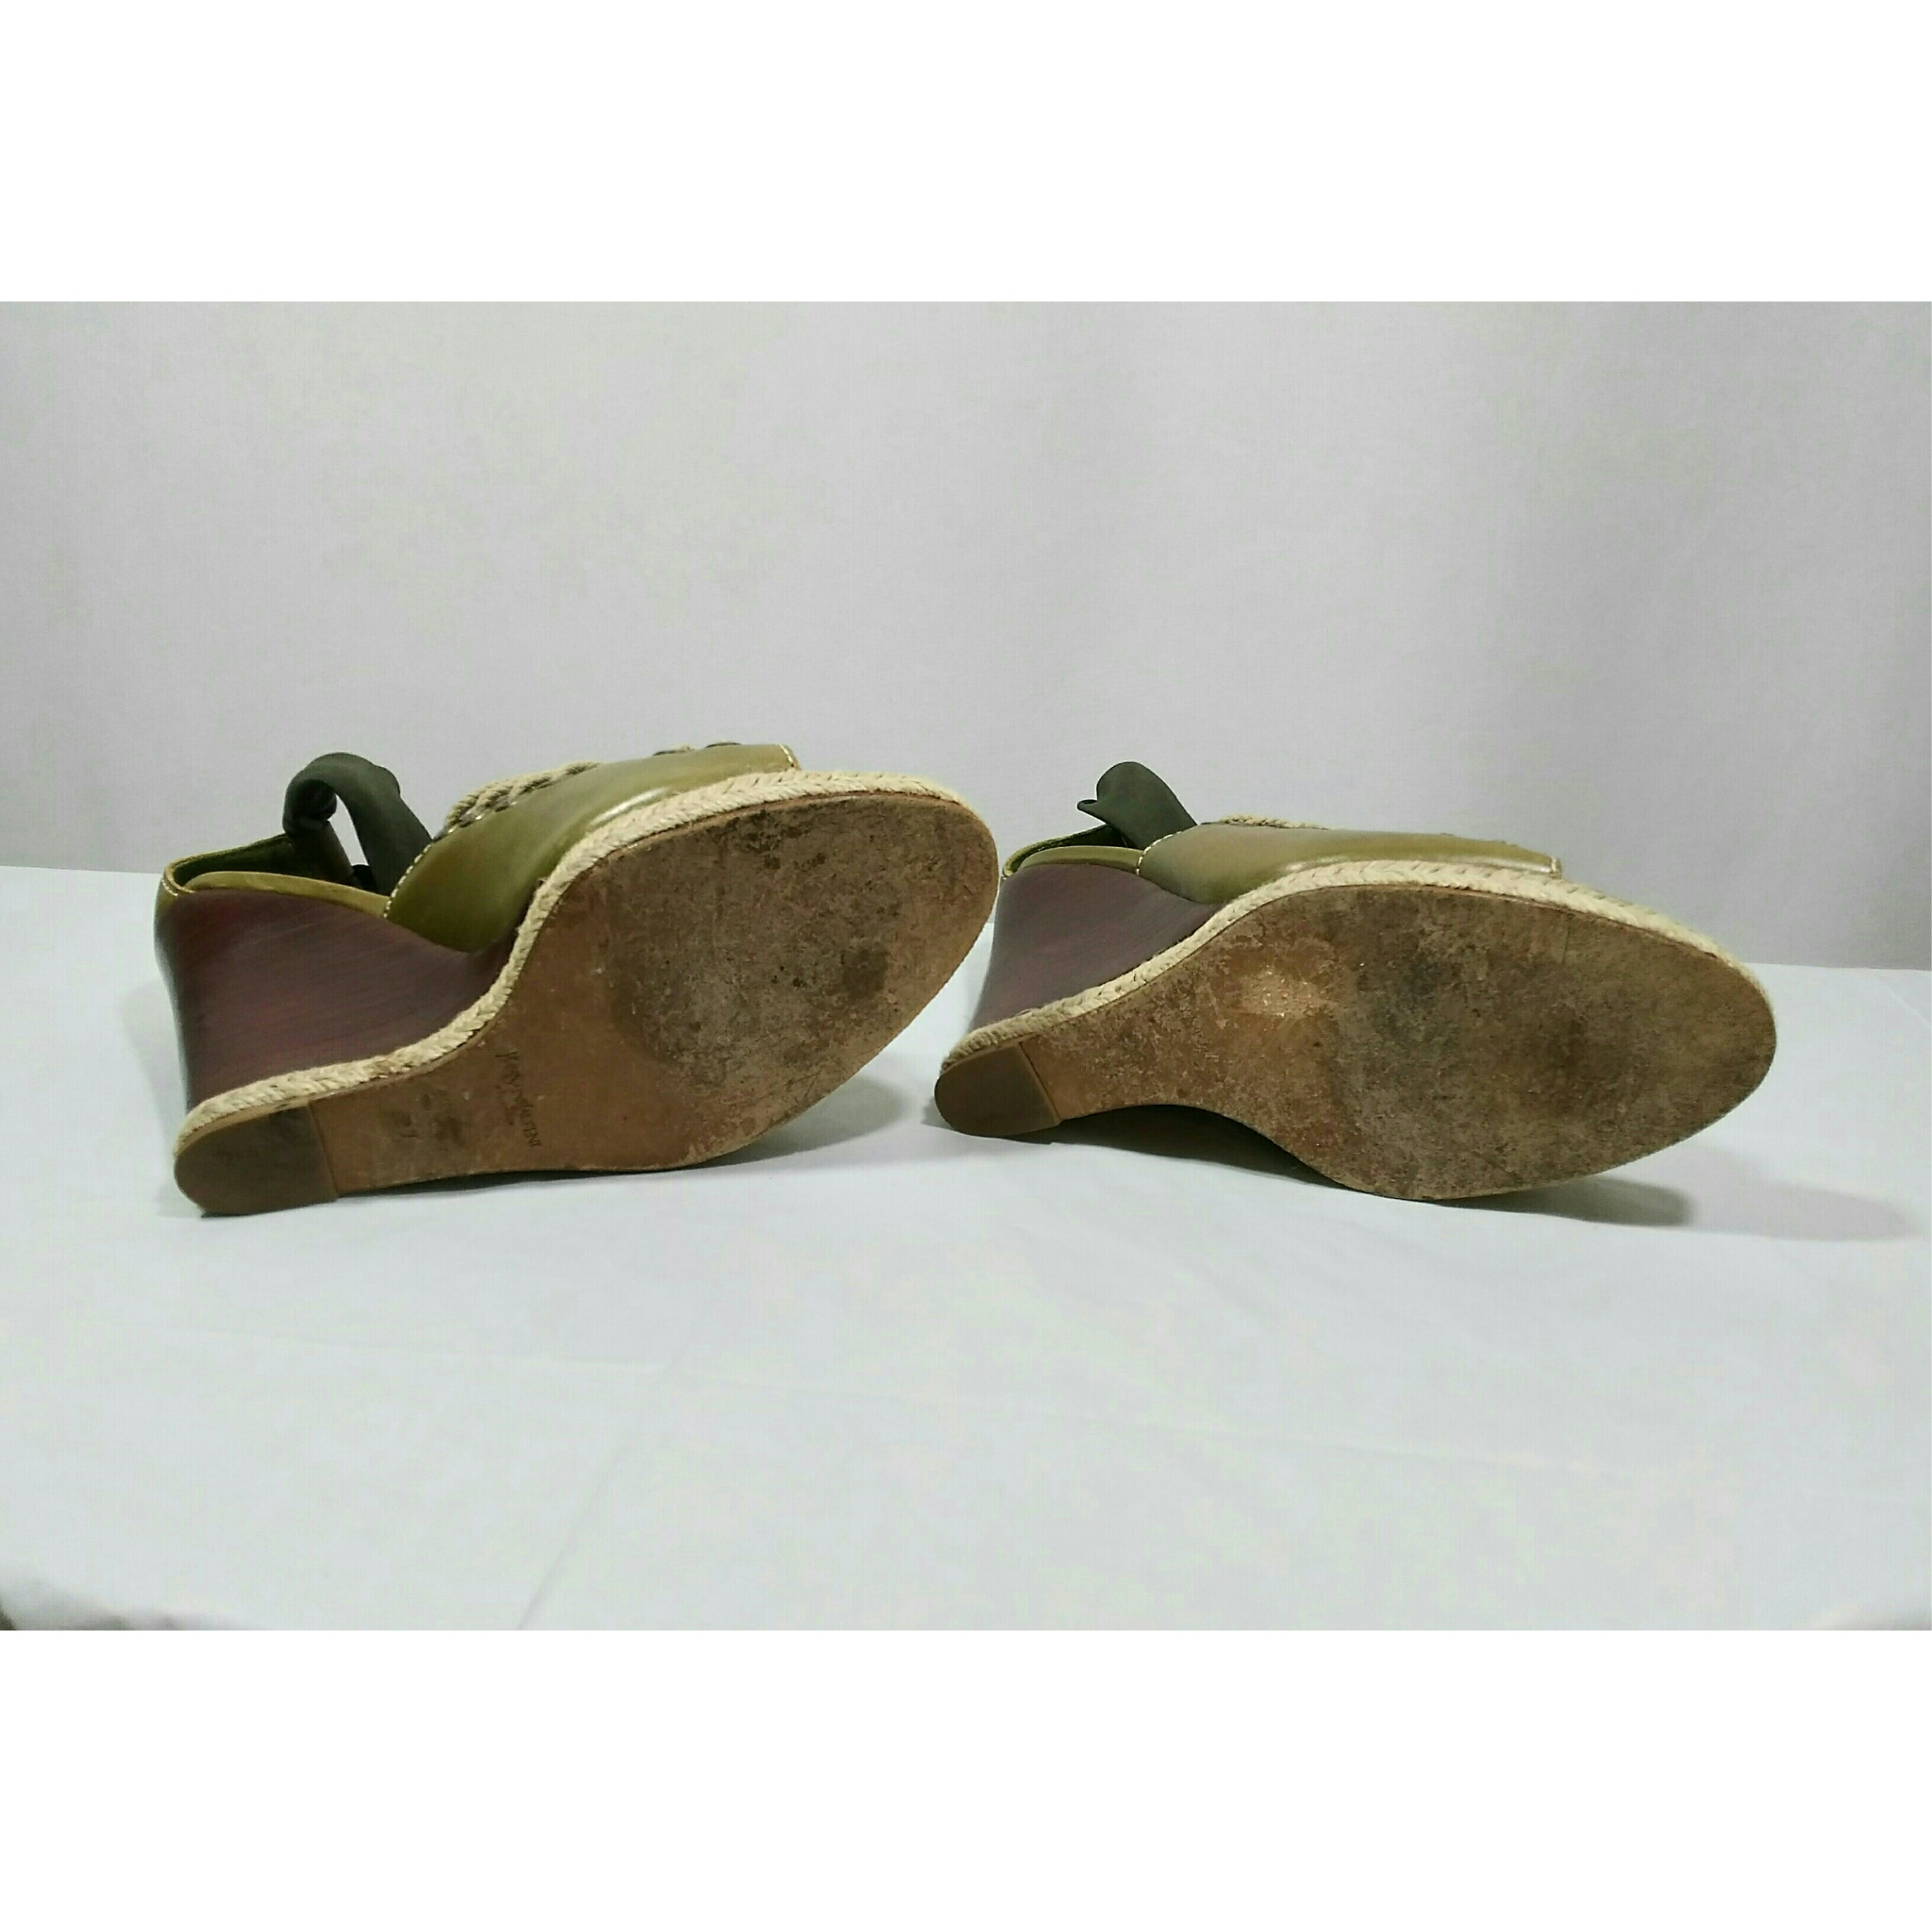 Vintage 1980's Yves Saint Laurent Rive Gauche Wedge Sandals; Size Italy 37 / US 7 /UK 5